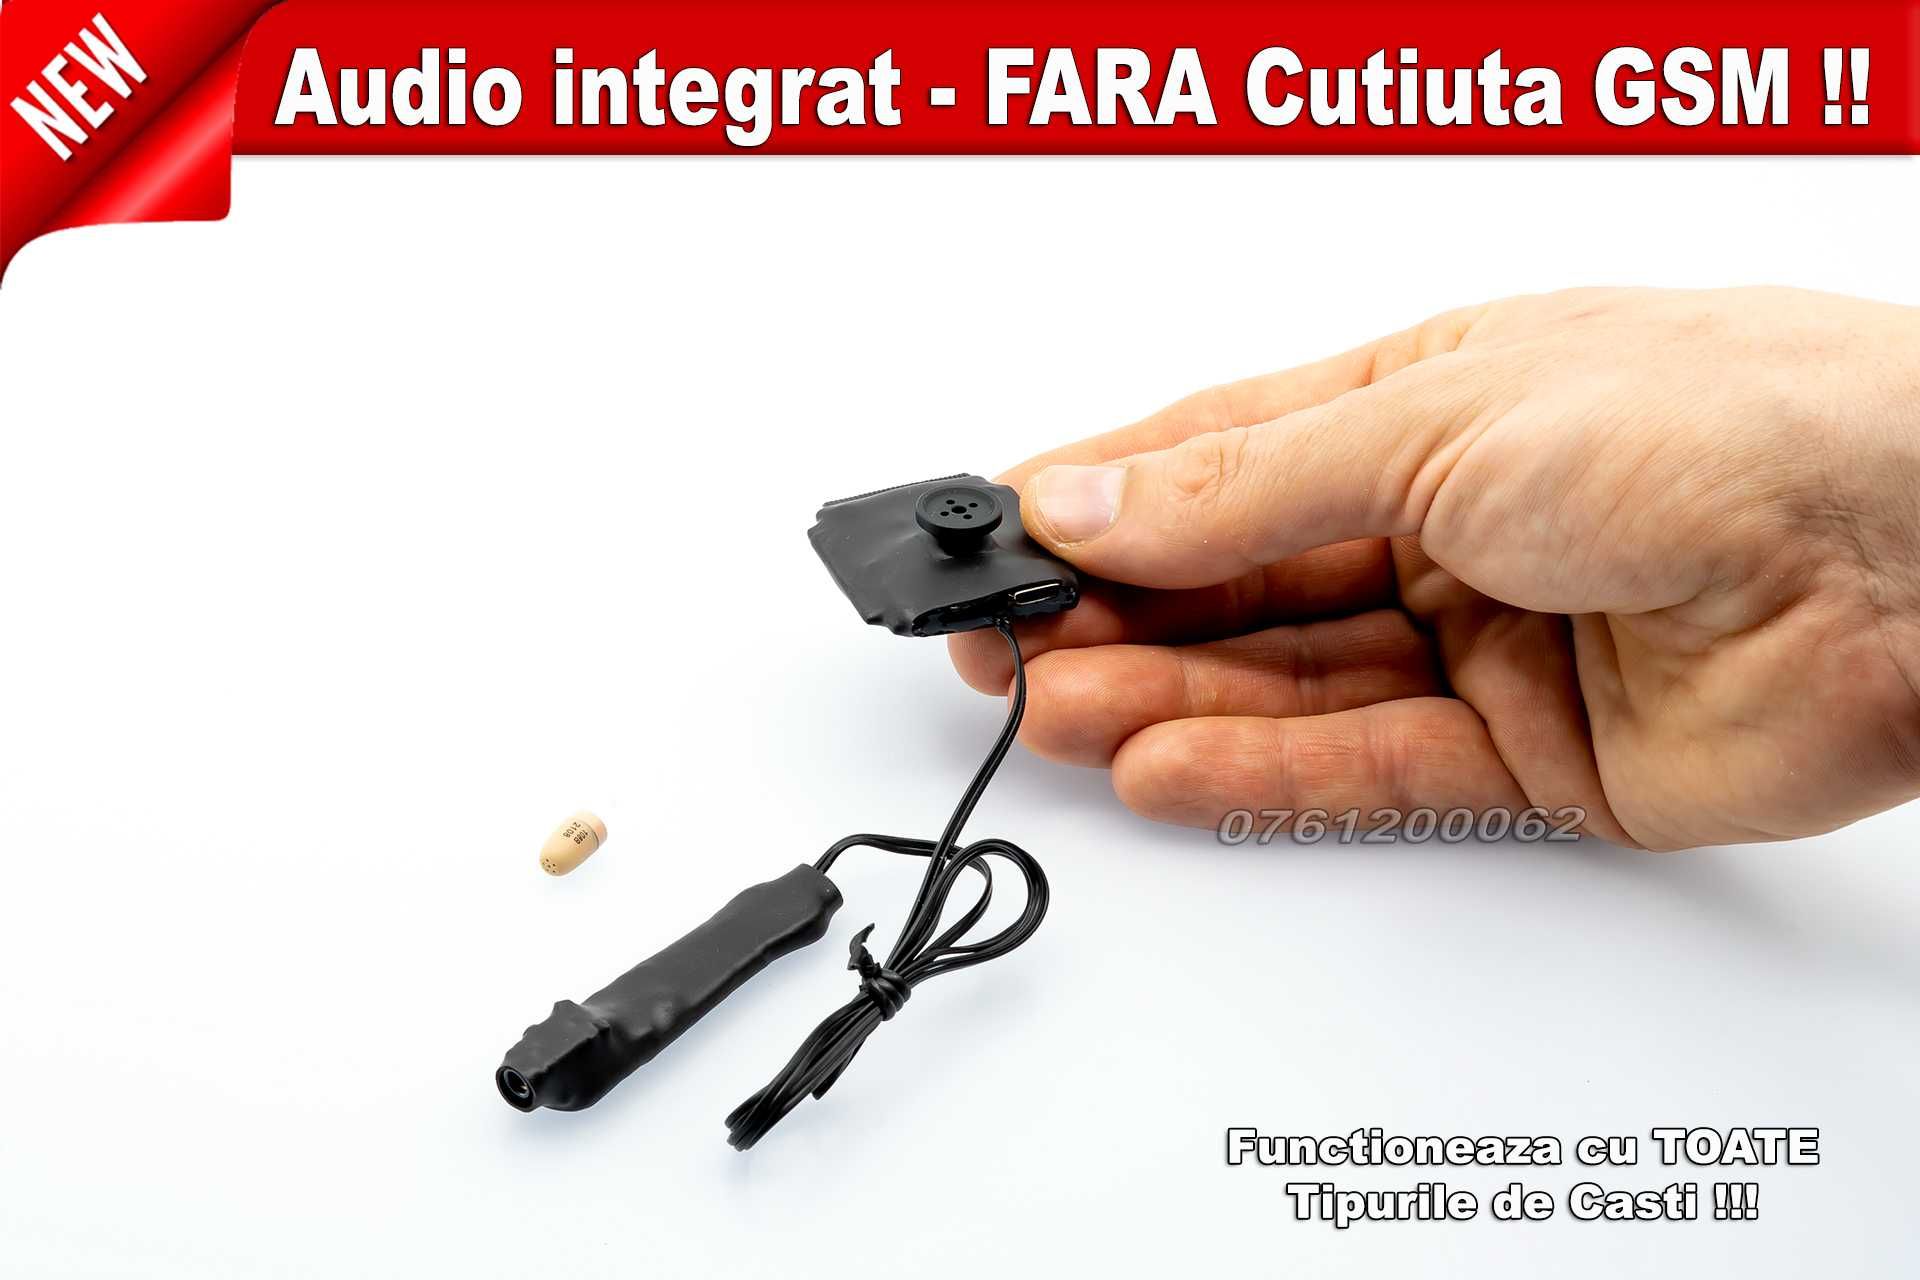 Casca de copiat + Camera in Nasture cu Audio Integrat Fara Cutiuta GSM